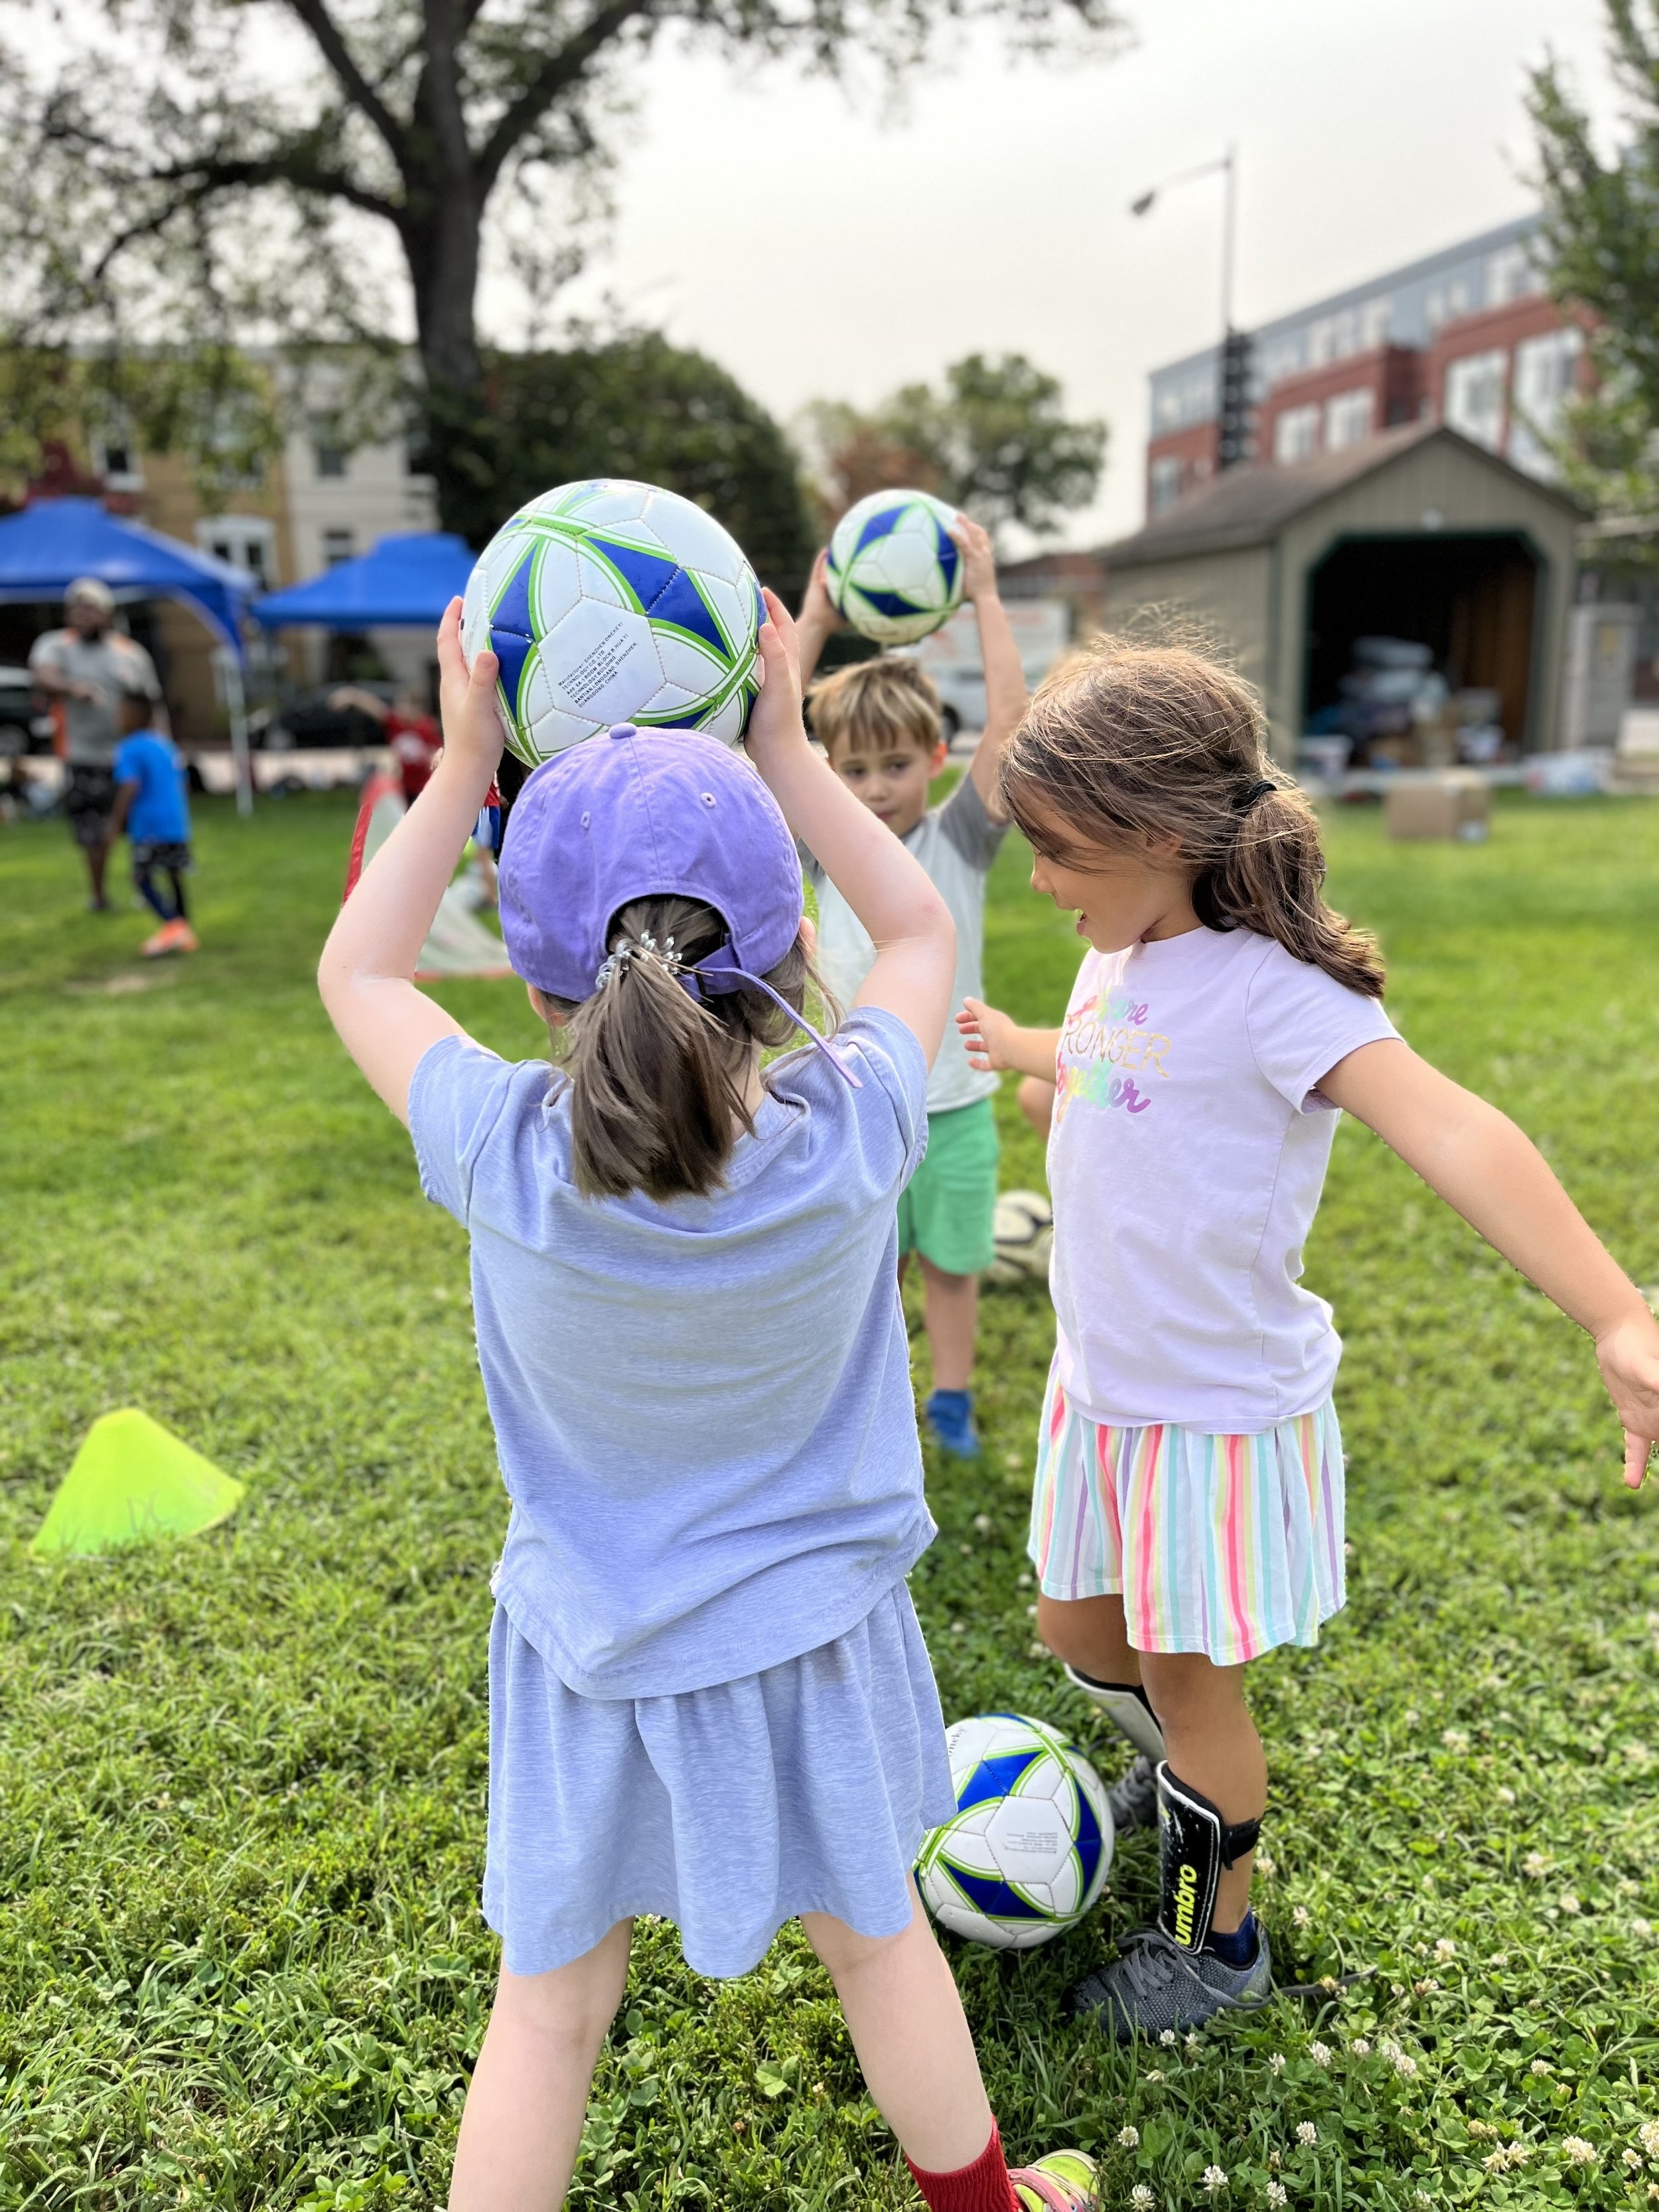 Dc-way-soccer-club-for-kids-in-washington-dc-summer-camp-at-tyler-elementary-school- 9033.jpeg